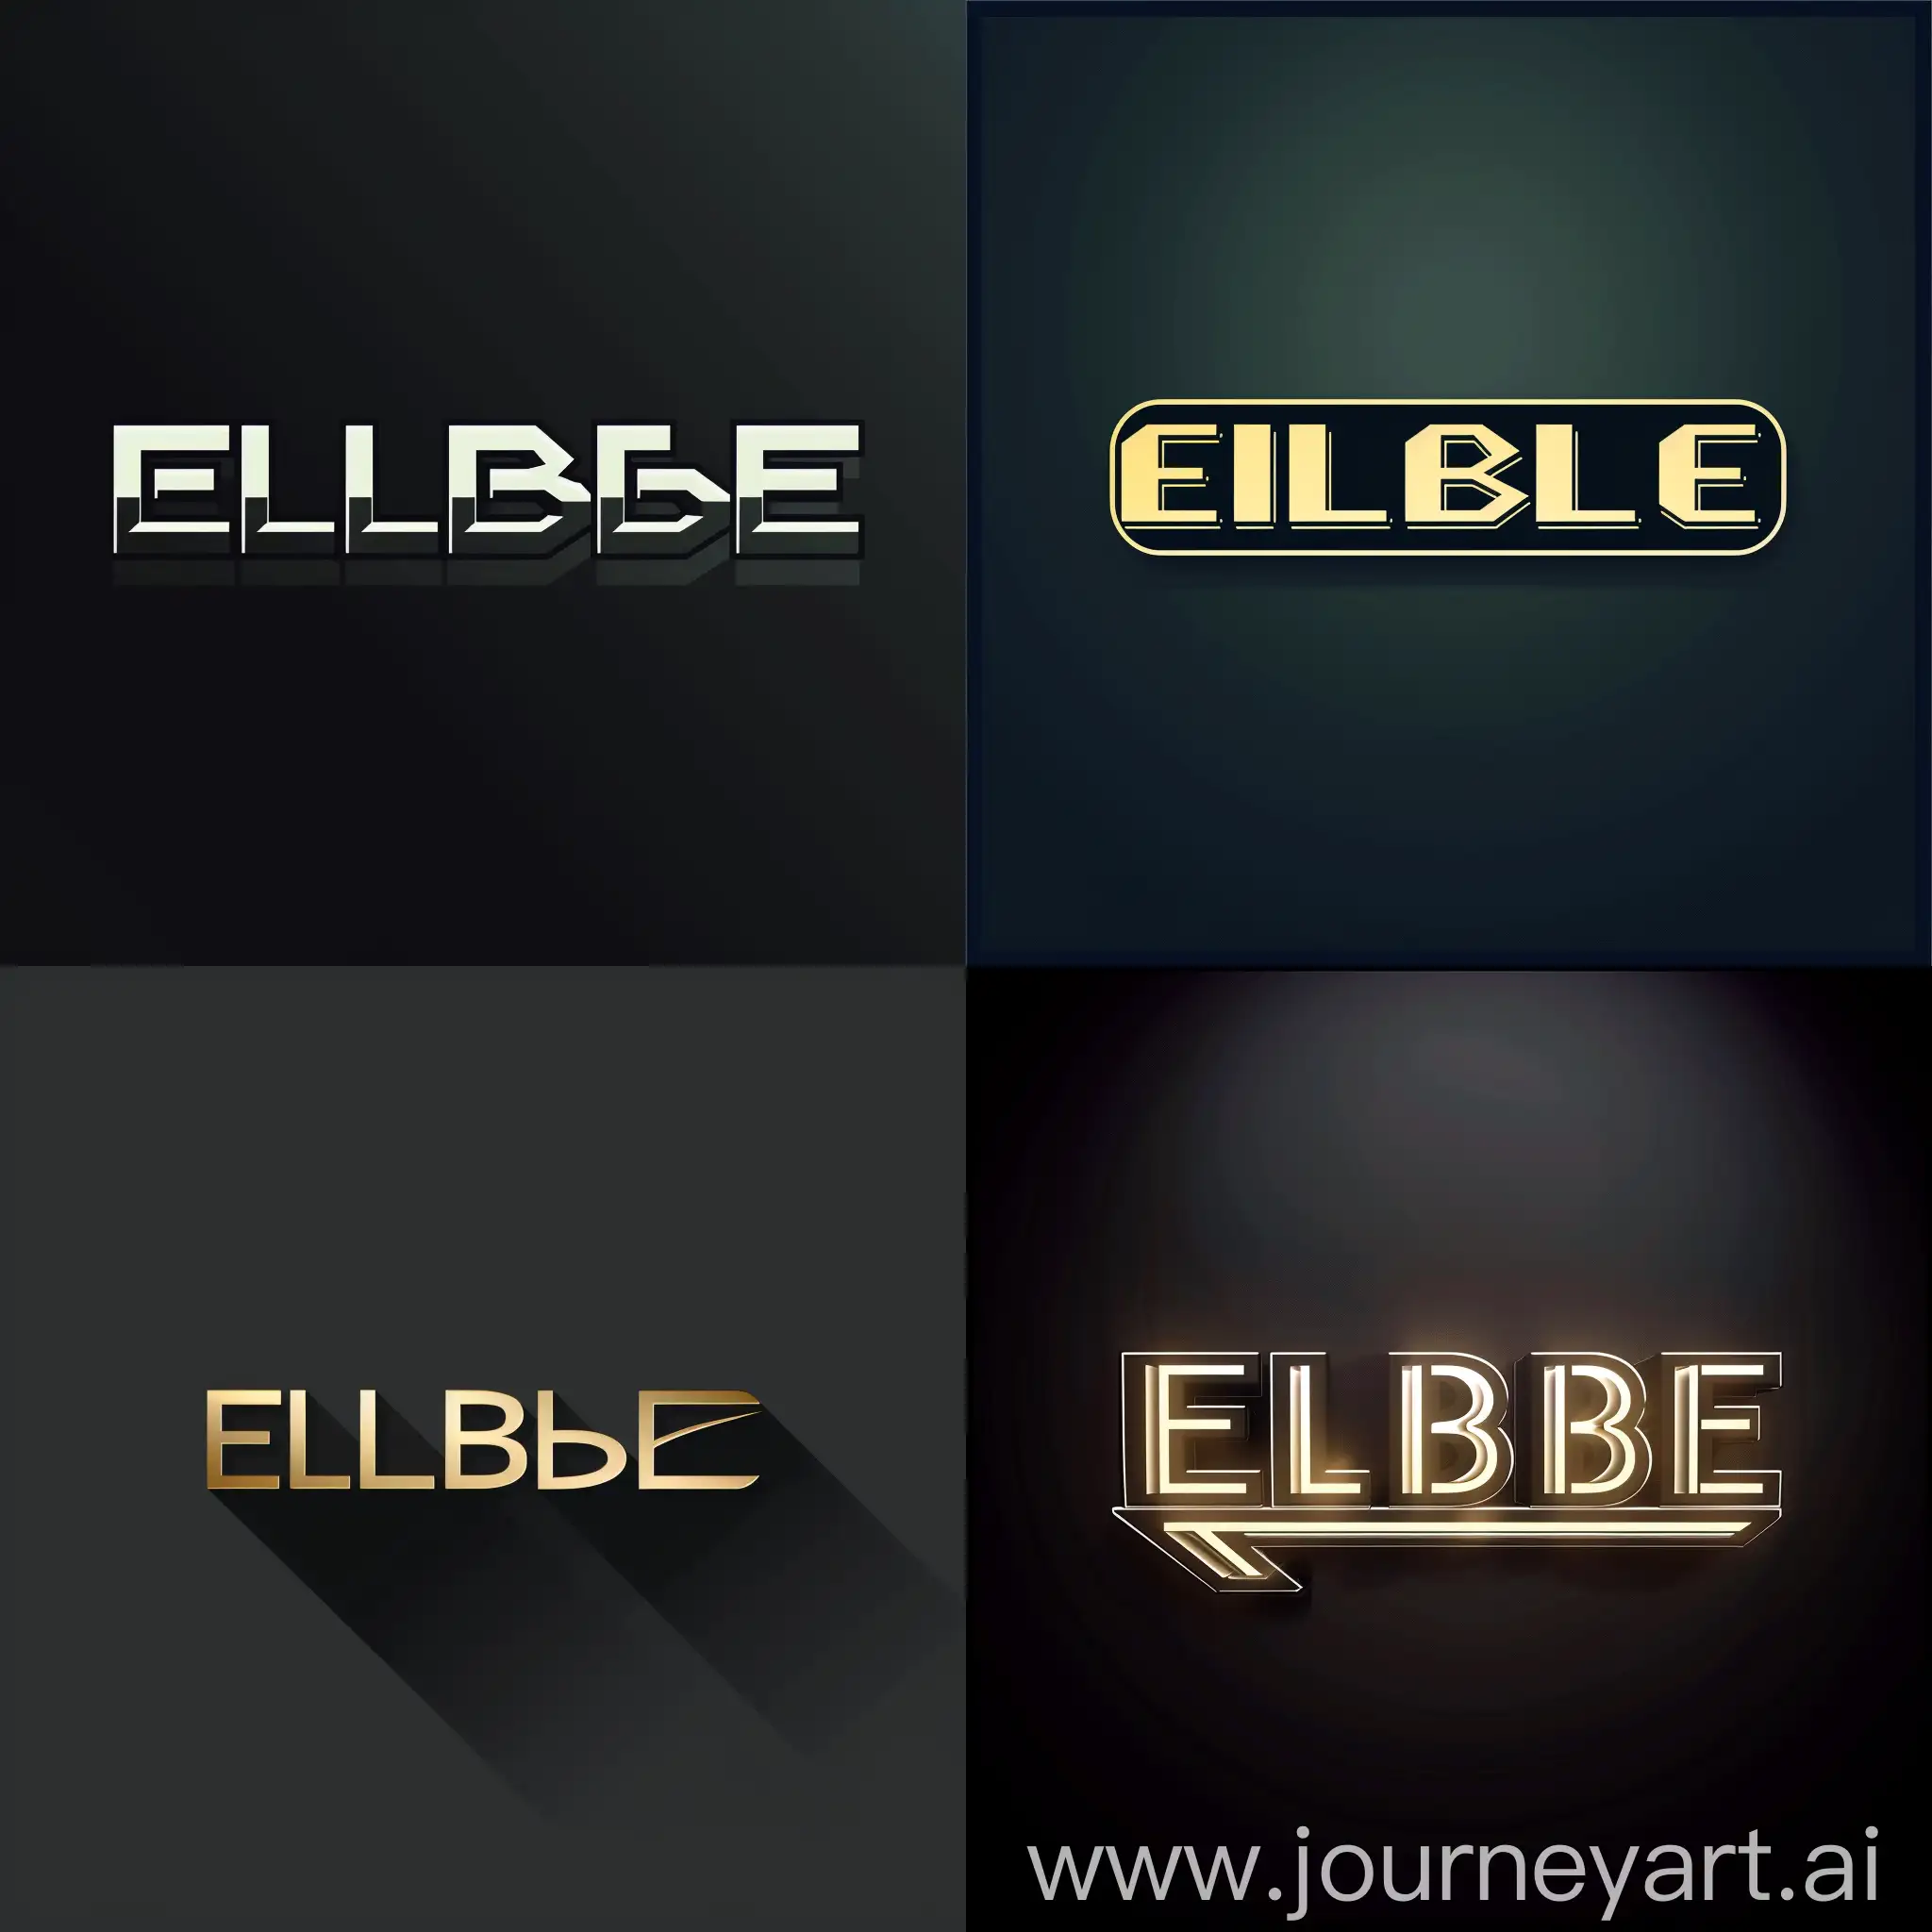 мне нужен логотип на темном фоне слово ELIGBLE. Формат строгий